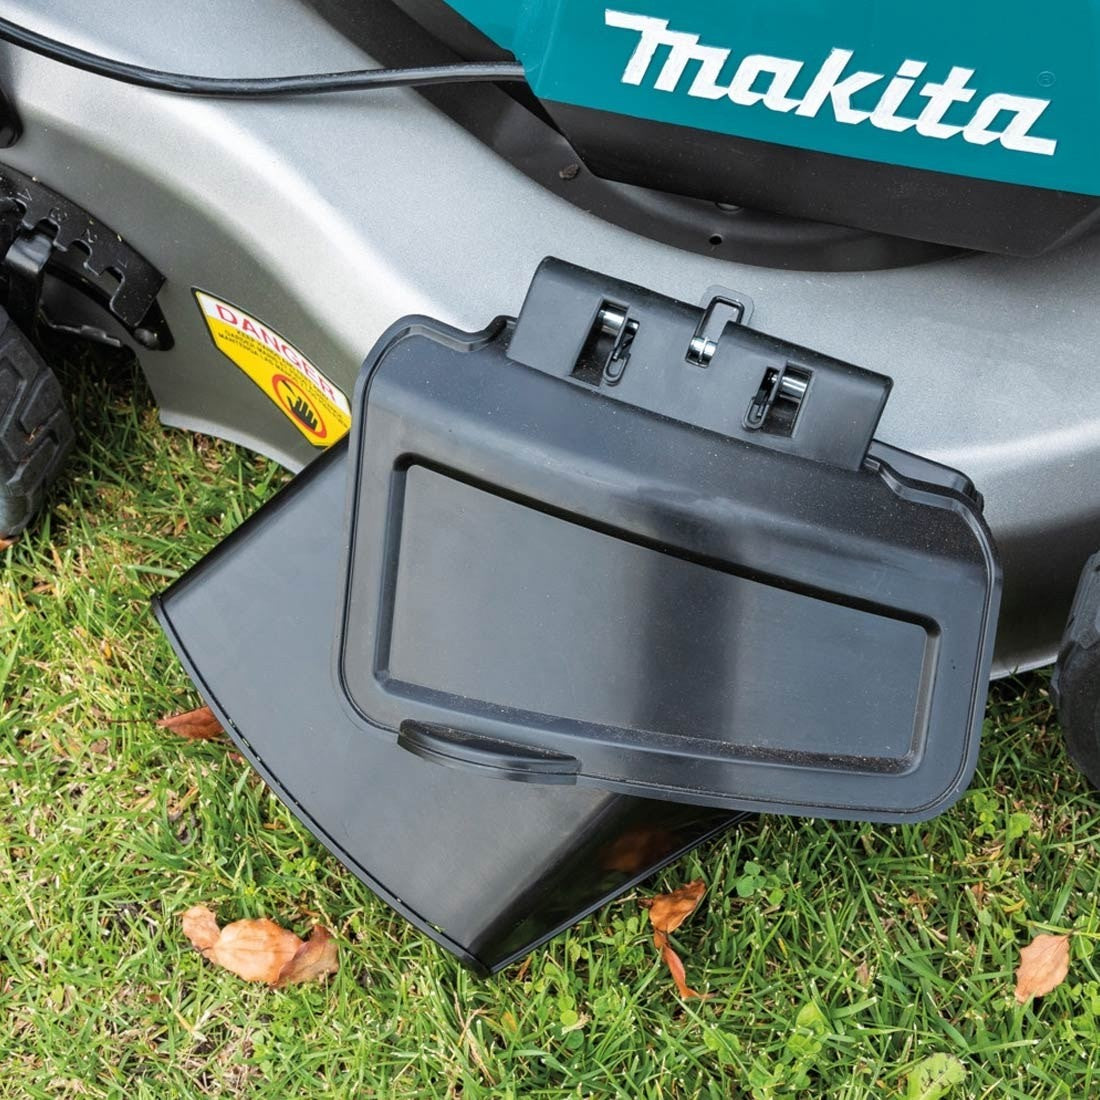 Makita DLM530Z Cordless Brushless Lawn Mower 530mm (21″) 18V x2 (36V) LXT® Li-Ion (Bare Tool)